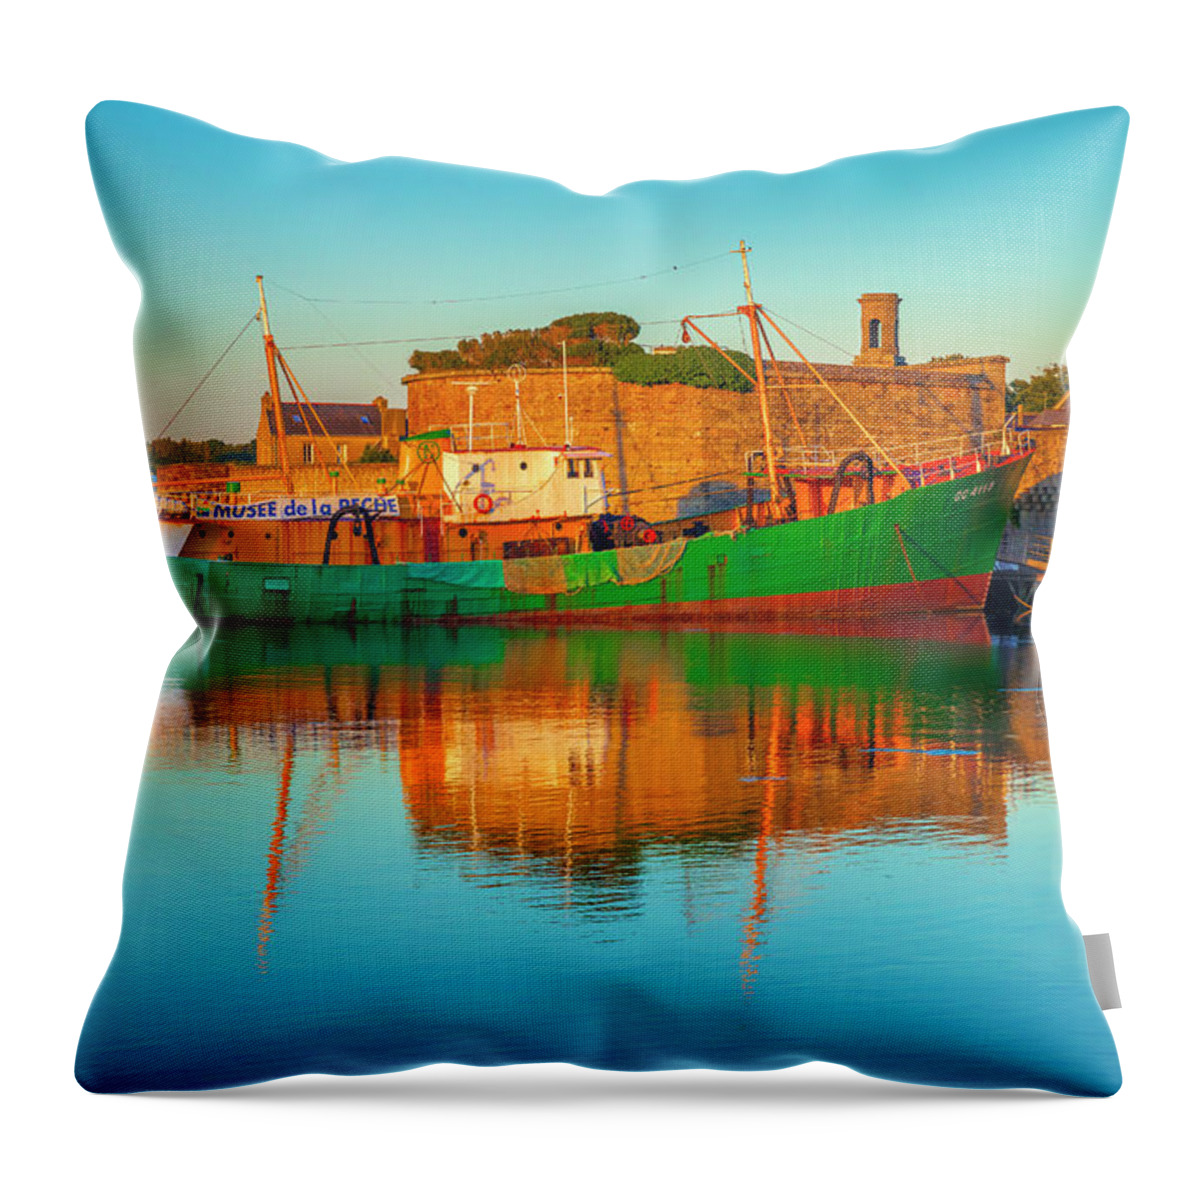 Estock Throw Pillow featuring the digital art France, Brittany, Concarneau, Atlantic Ocean, Finistere by Olimpio Fantuz